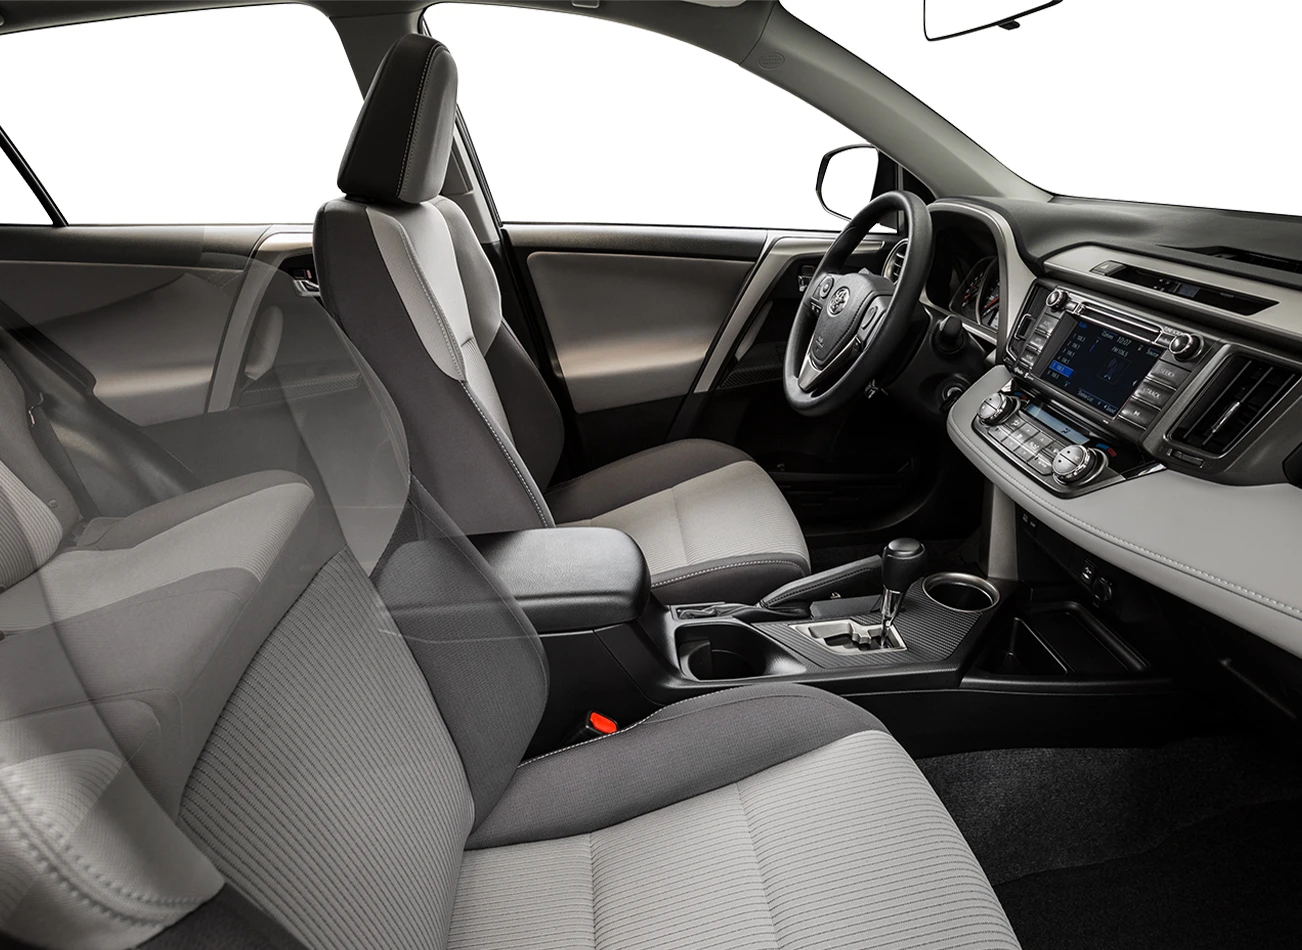 2015 Toyota RAV4: Reviews, Photos, and More: Reasons to Buy #5 | CarMax